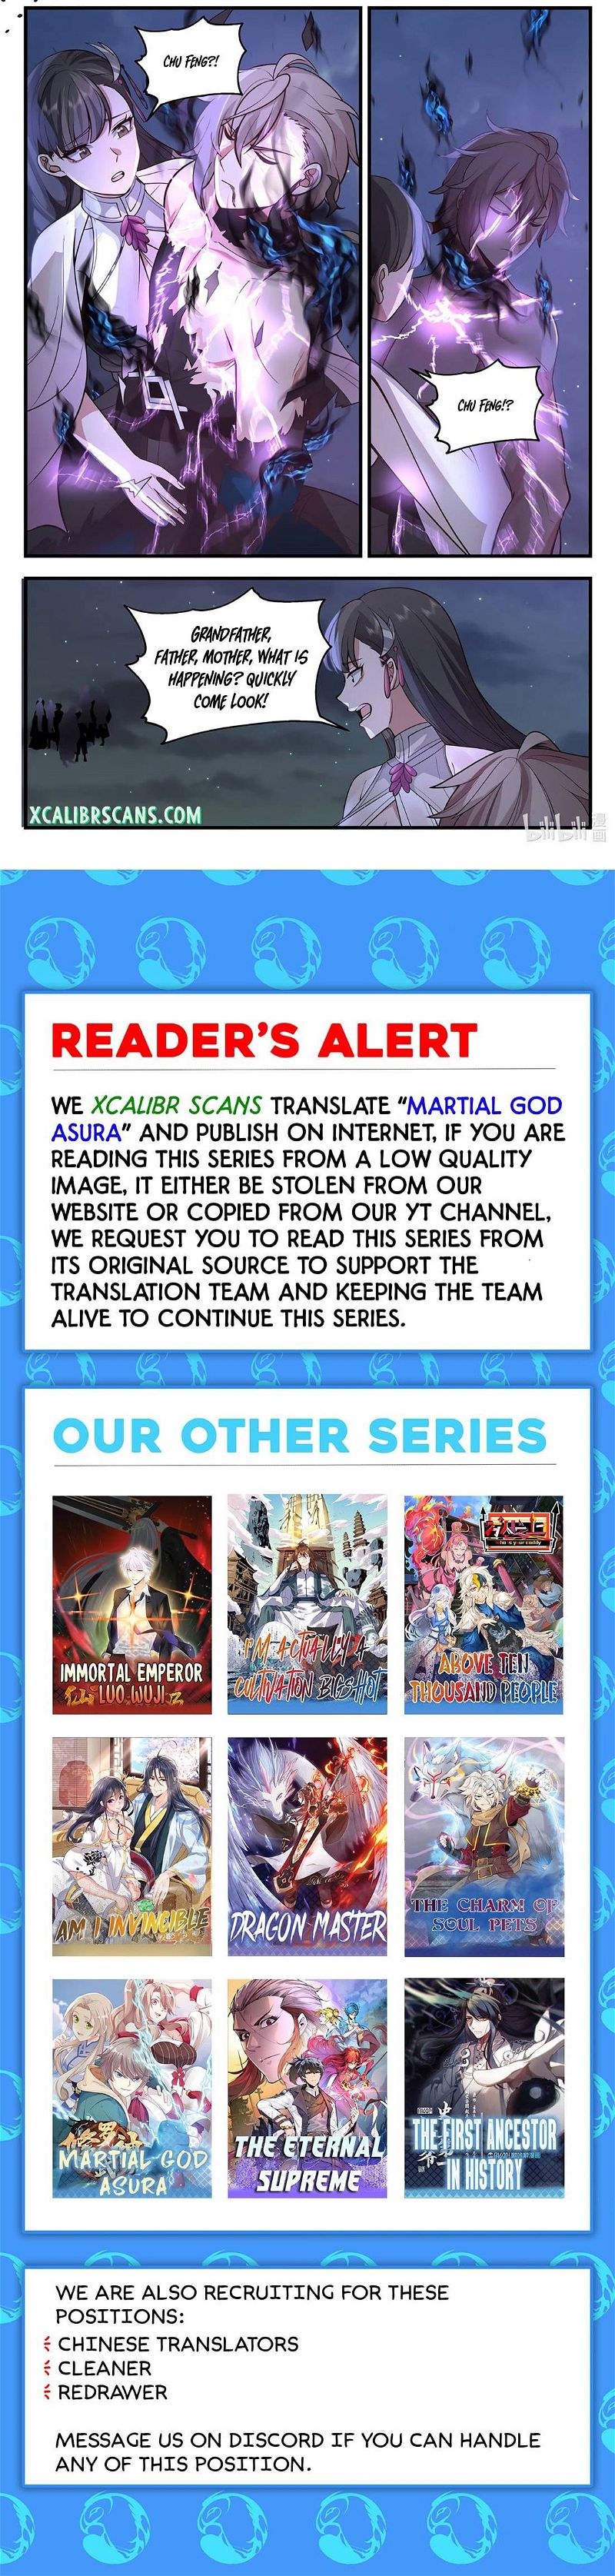 Martial God Asura Chapter 540 page 10